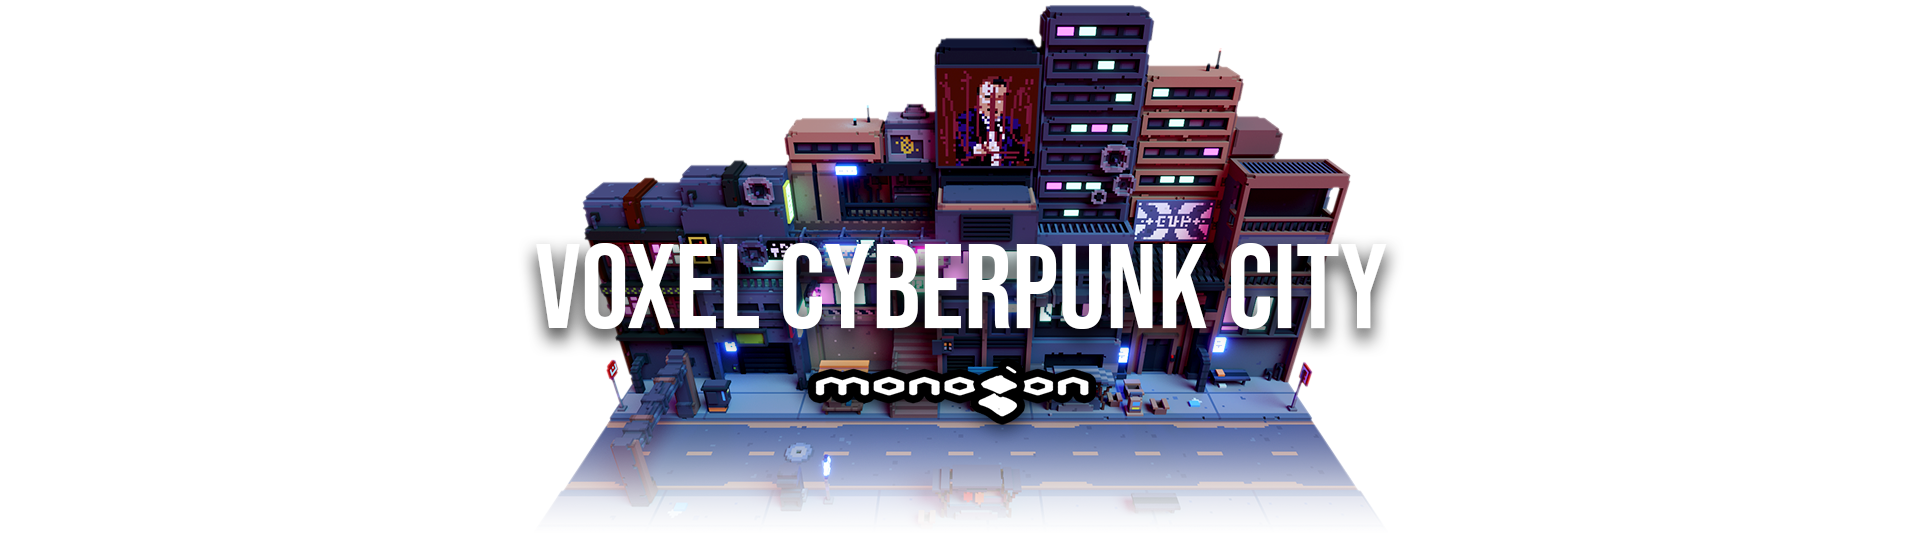 Voxel Cyberpunk City - monogon